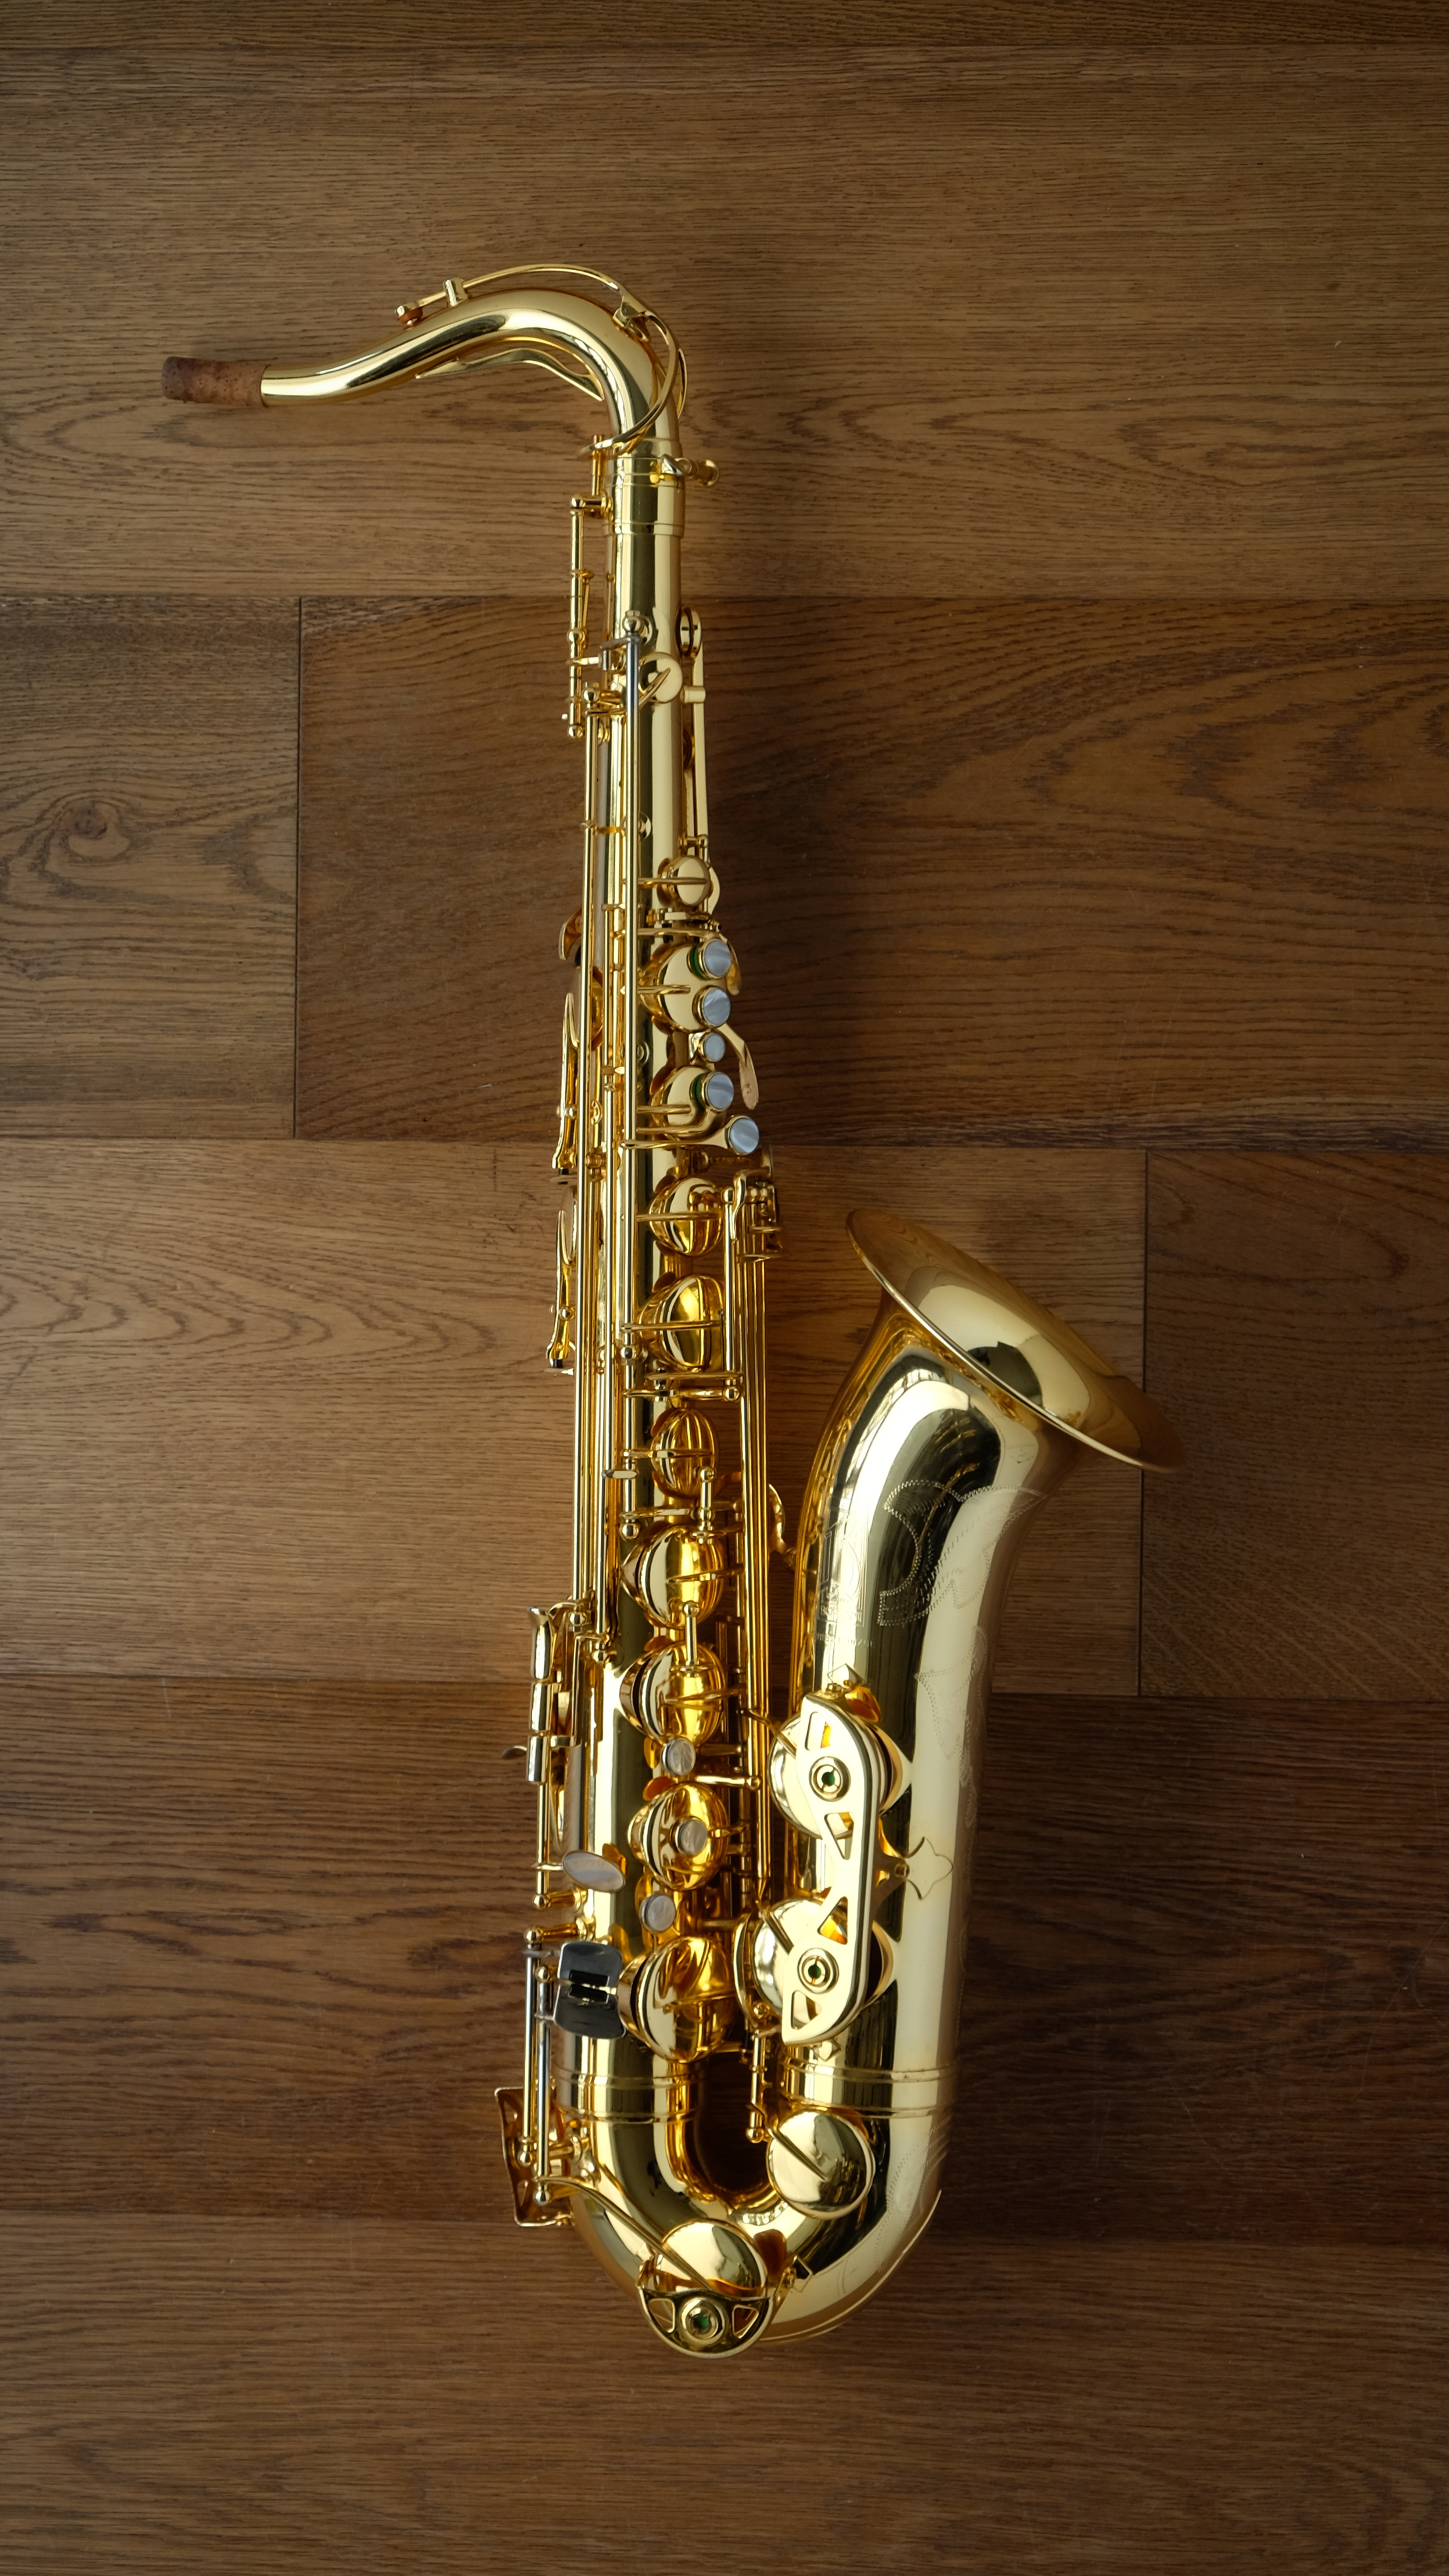 (Used) Borgani 'Ponzol' Series 24K Gold Plated Tenor Saxophone